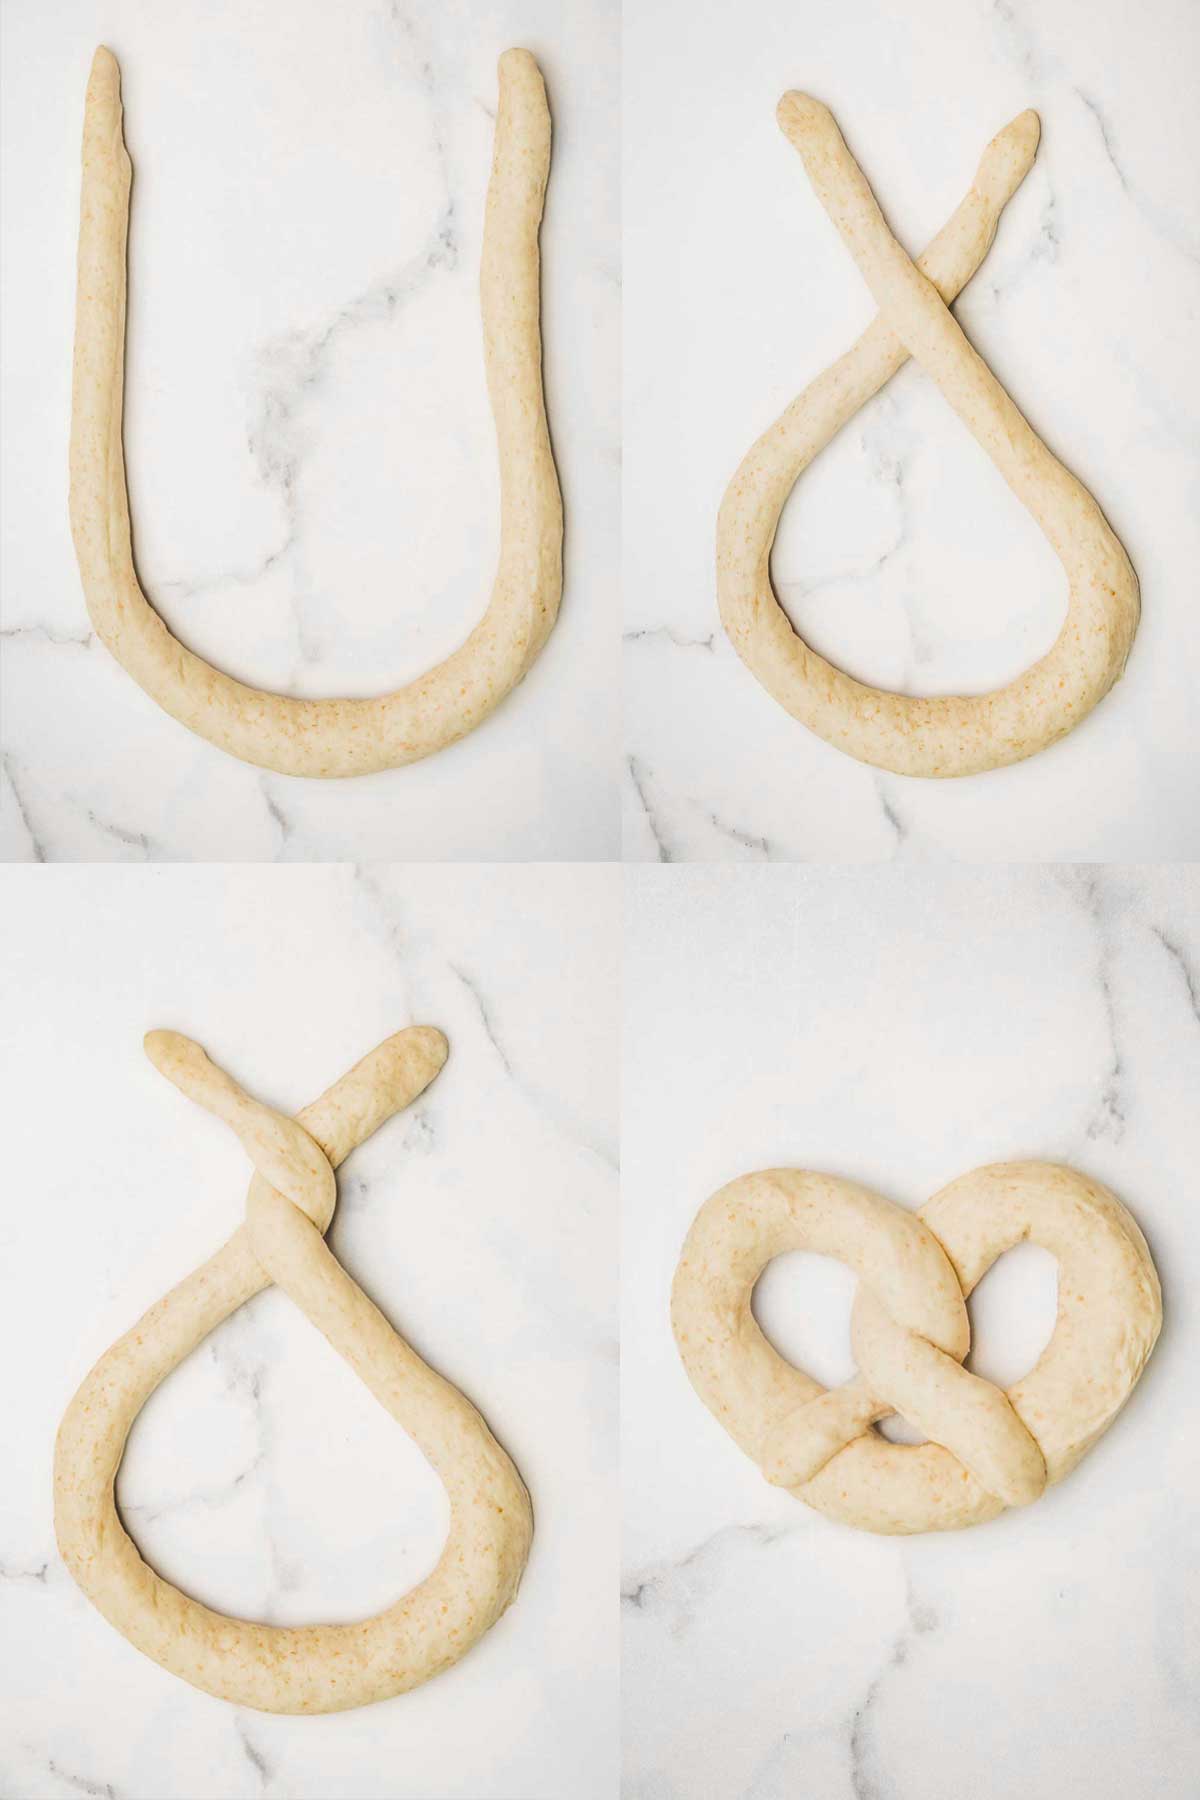 Shaping of pretzel dough